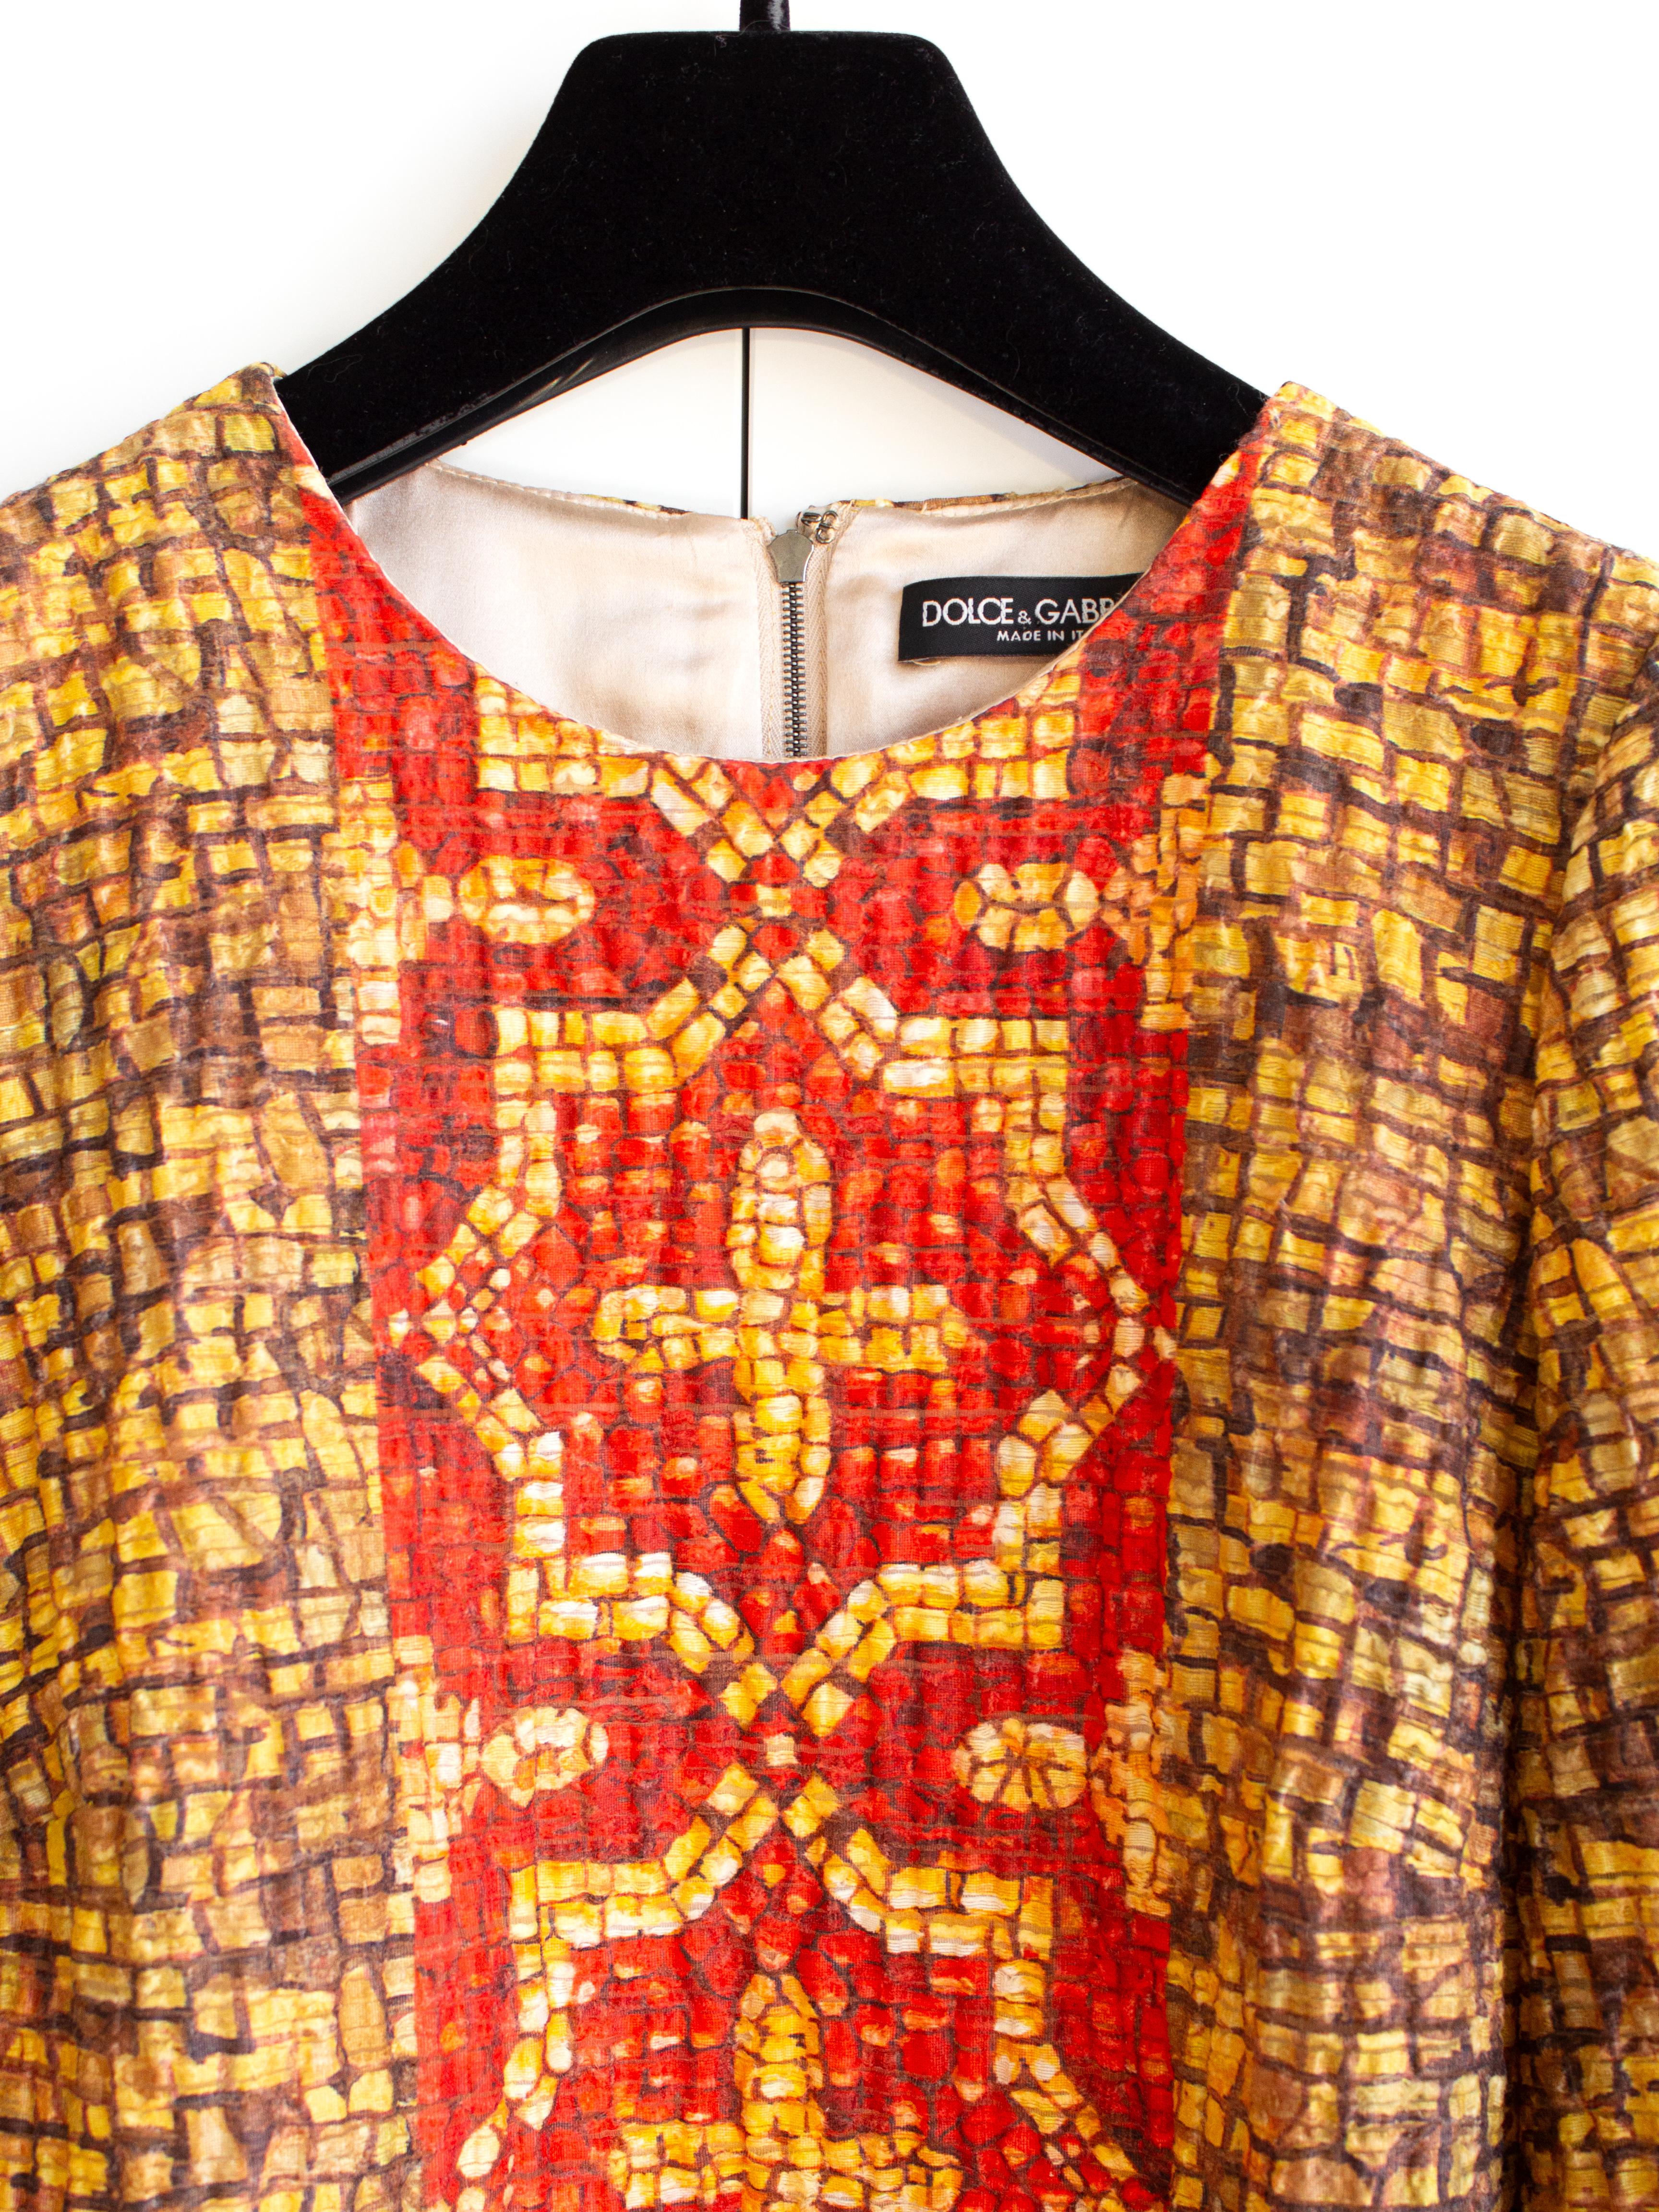 Dolce&Gabbana Fall/Winter 2013 Byzantine Runway Mosaic Gold Red Cross Dress For Sale 4